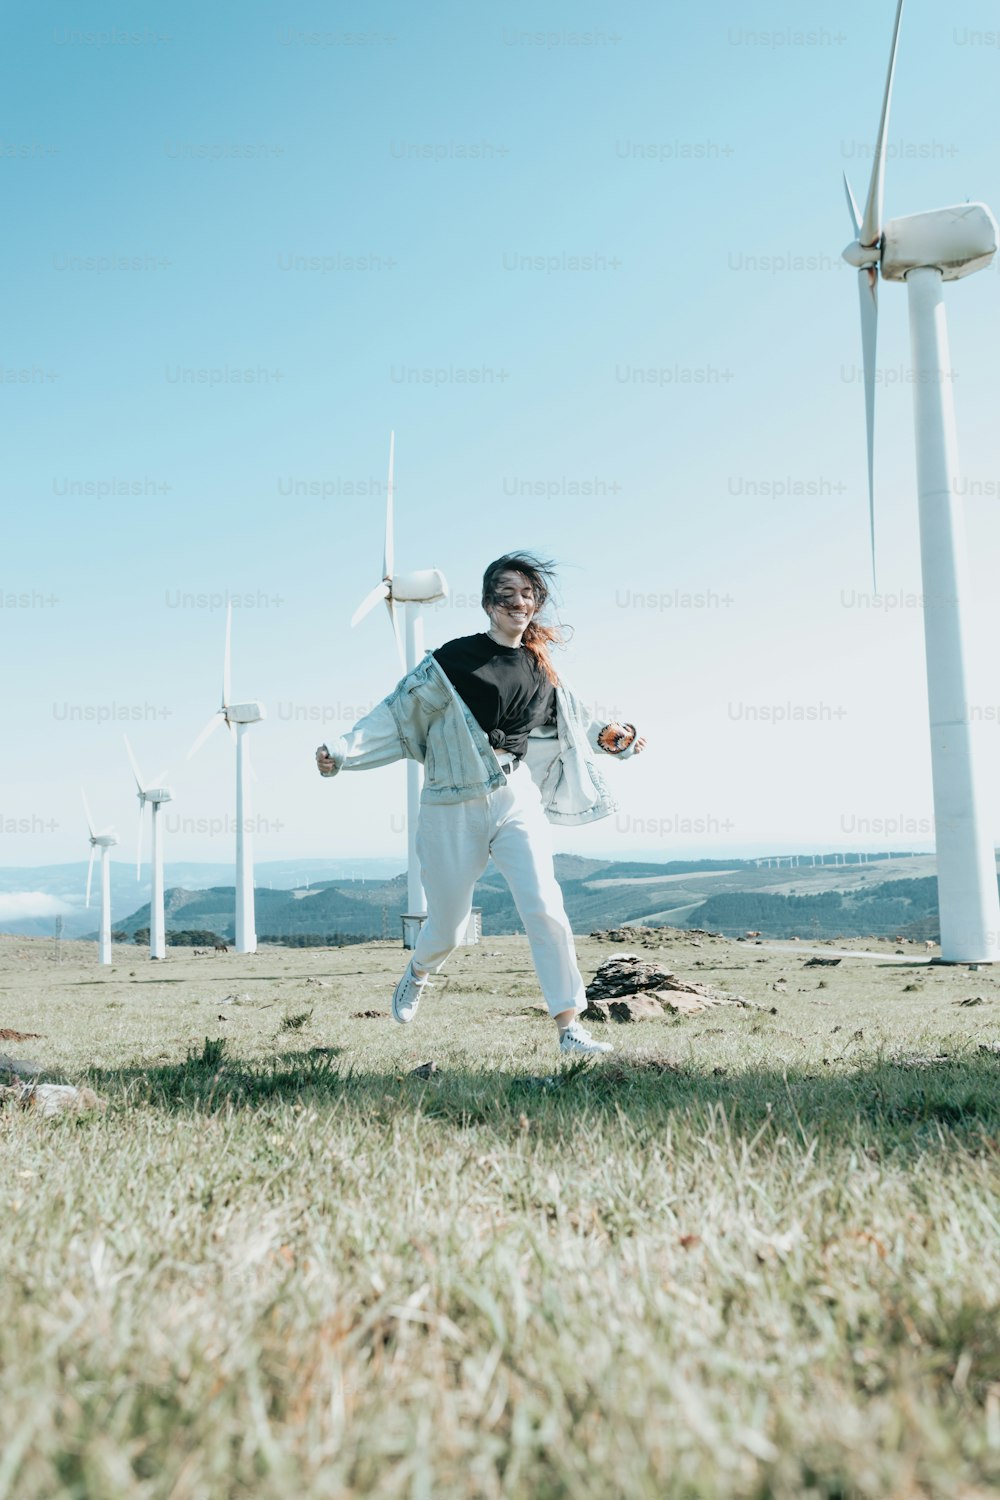 a man is running in a field of wind turbines